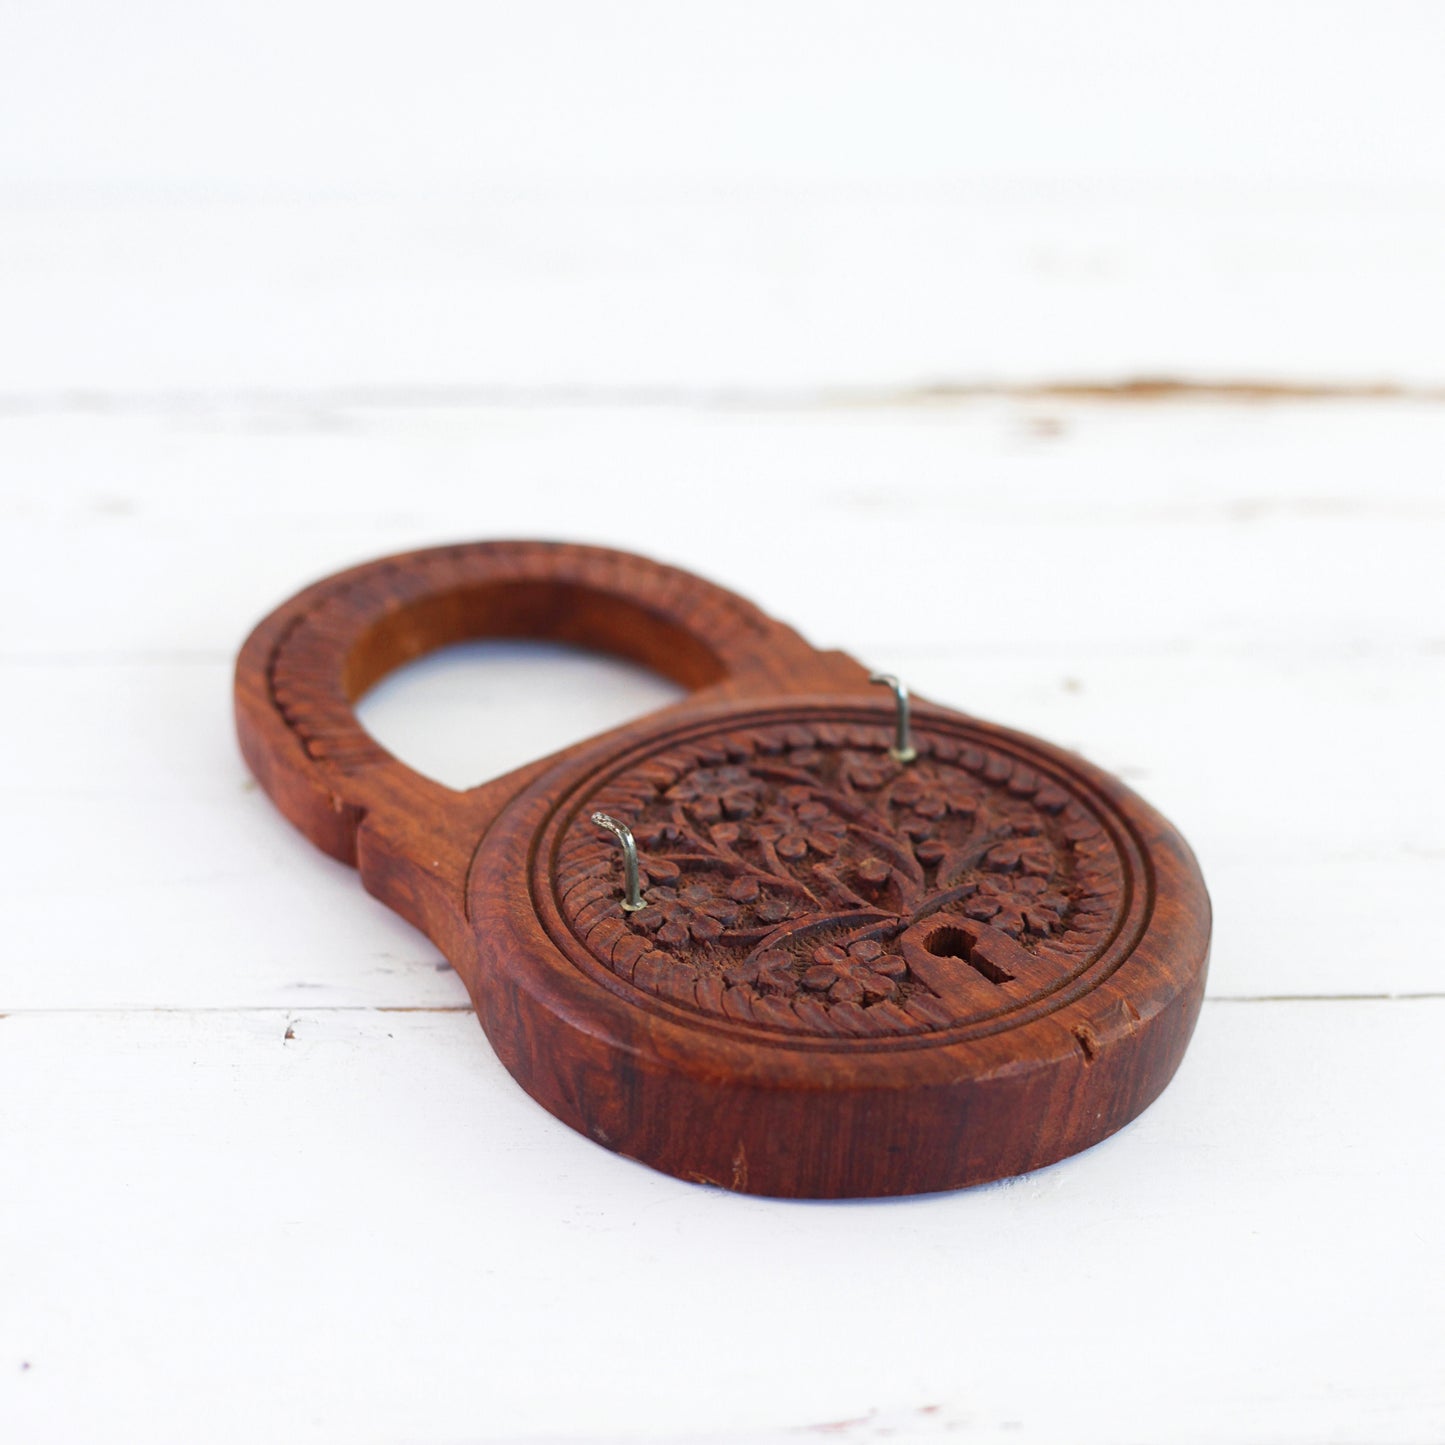 SOLD - Vintage Carved Wood Key Rack